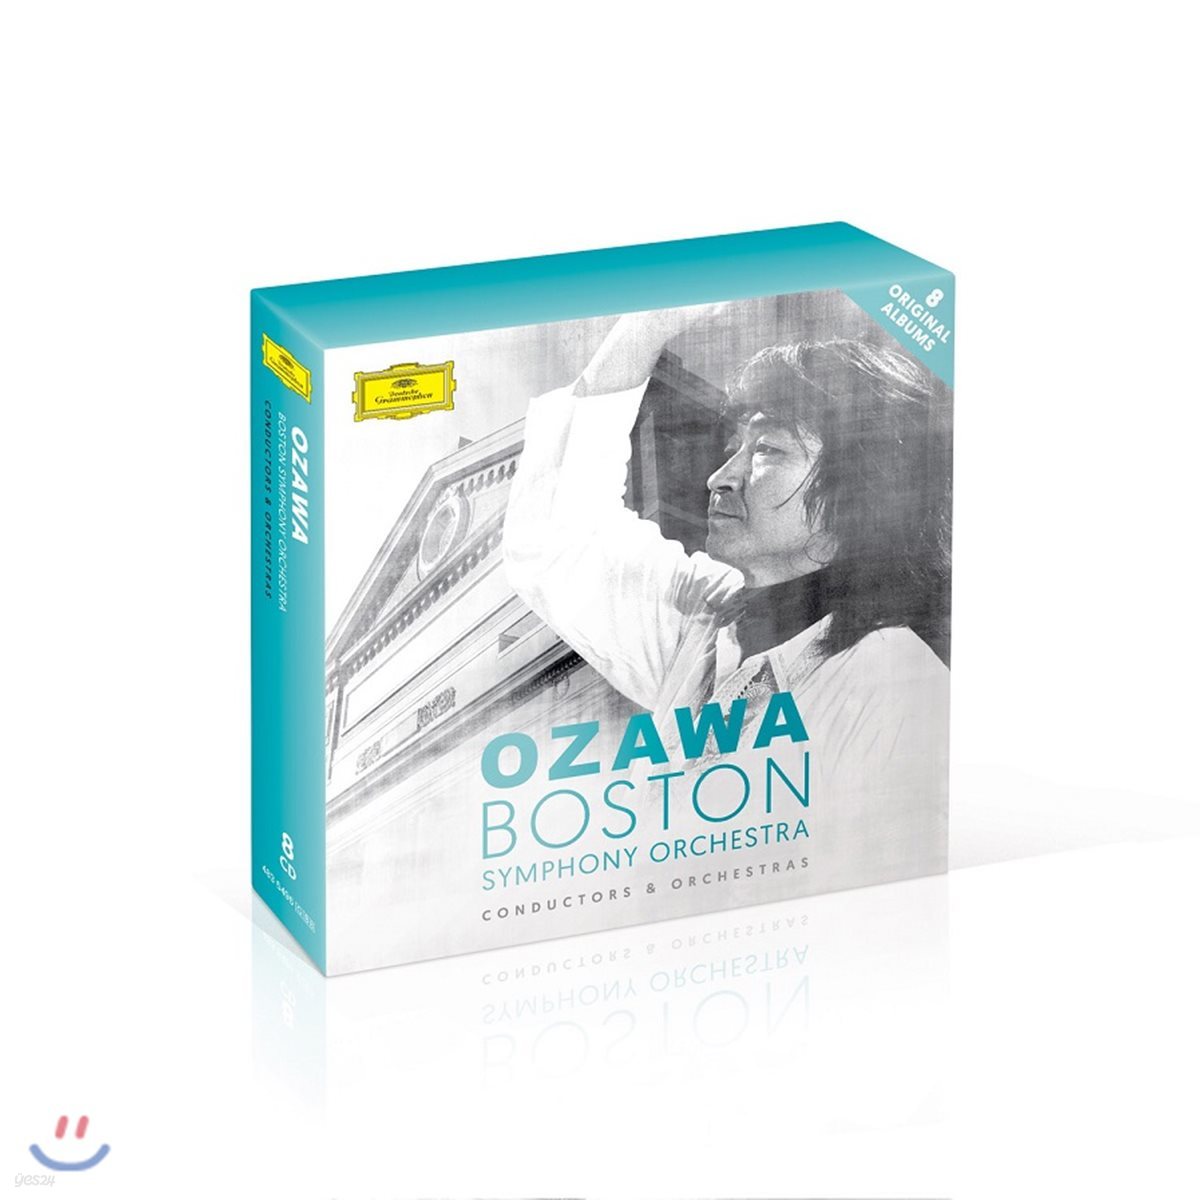 Seiji Ozawa 오자와와 보스턴 심포니 8개의 명반 (Ozawa / Boston Symphony Orchestra Conductors & Orchestras)